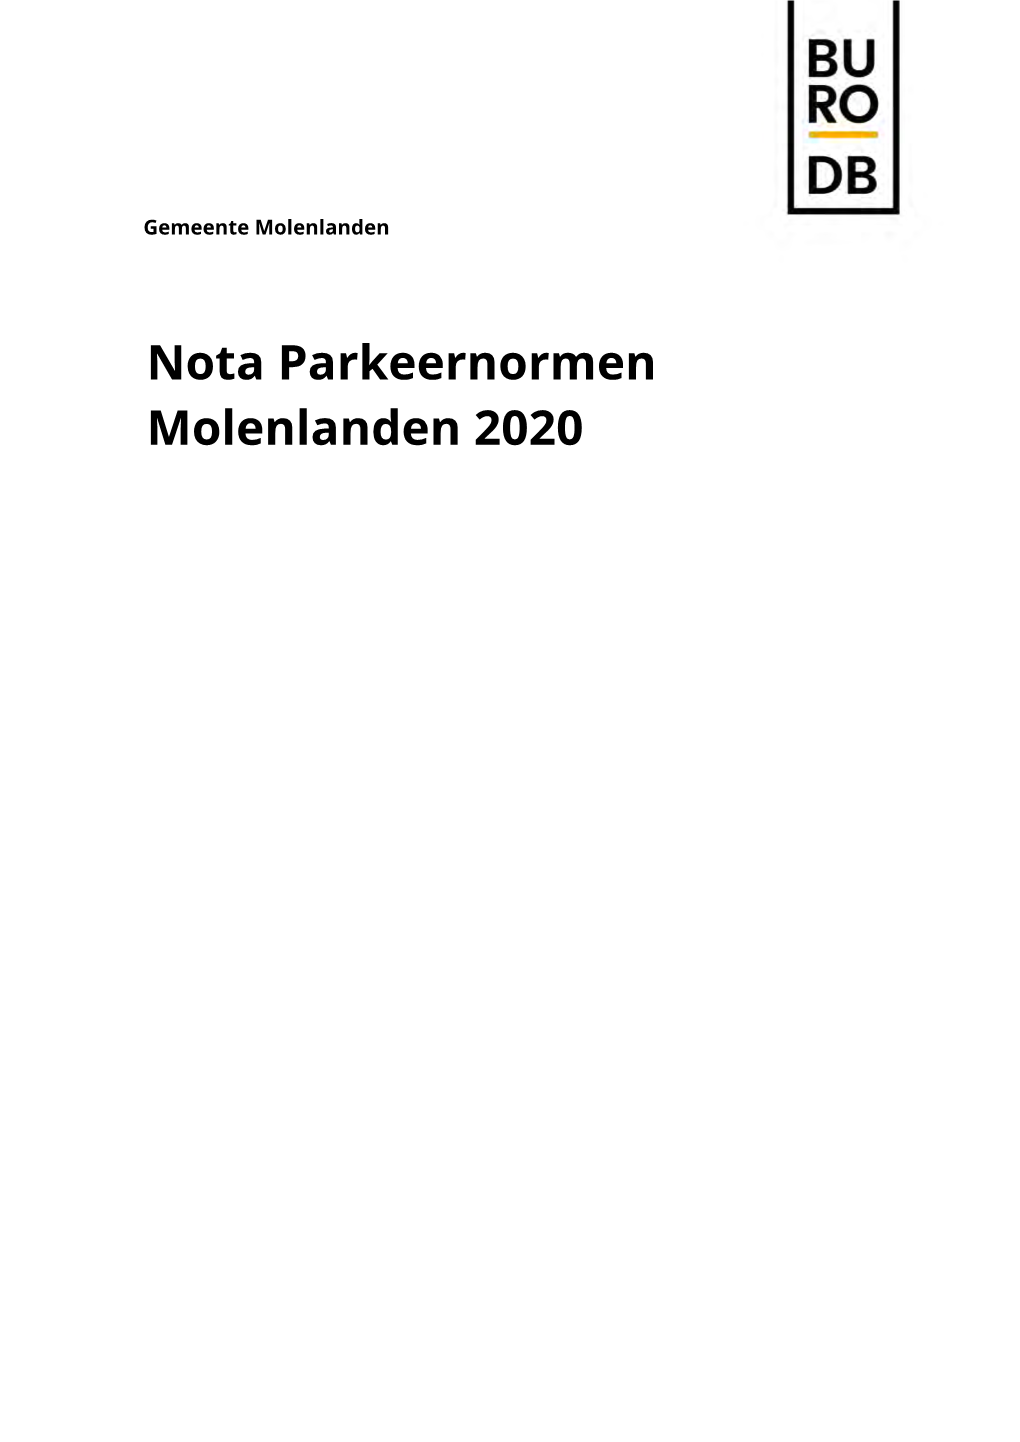 Nota Parkeernormen Molenlanden 2020